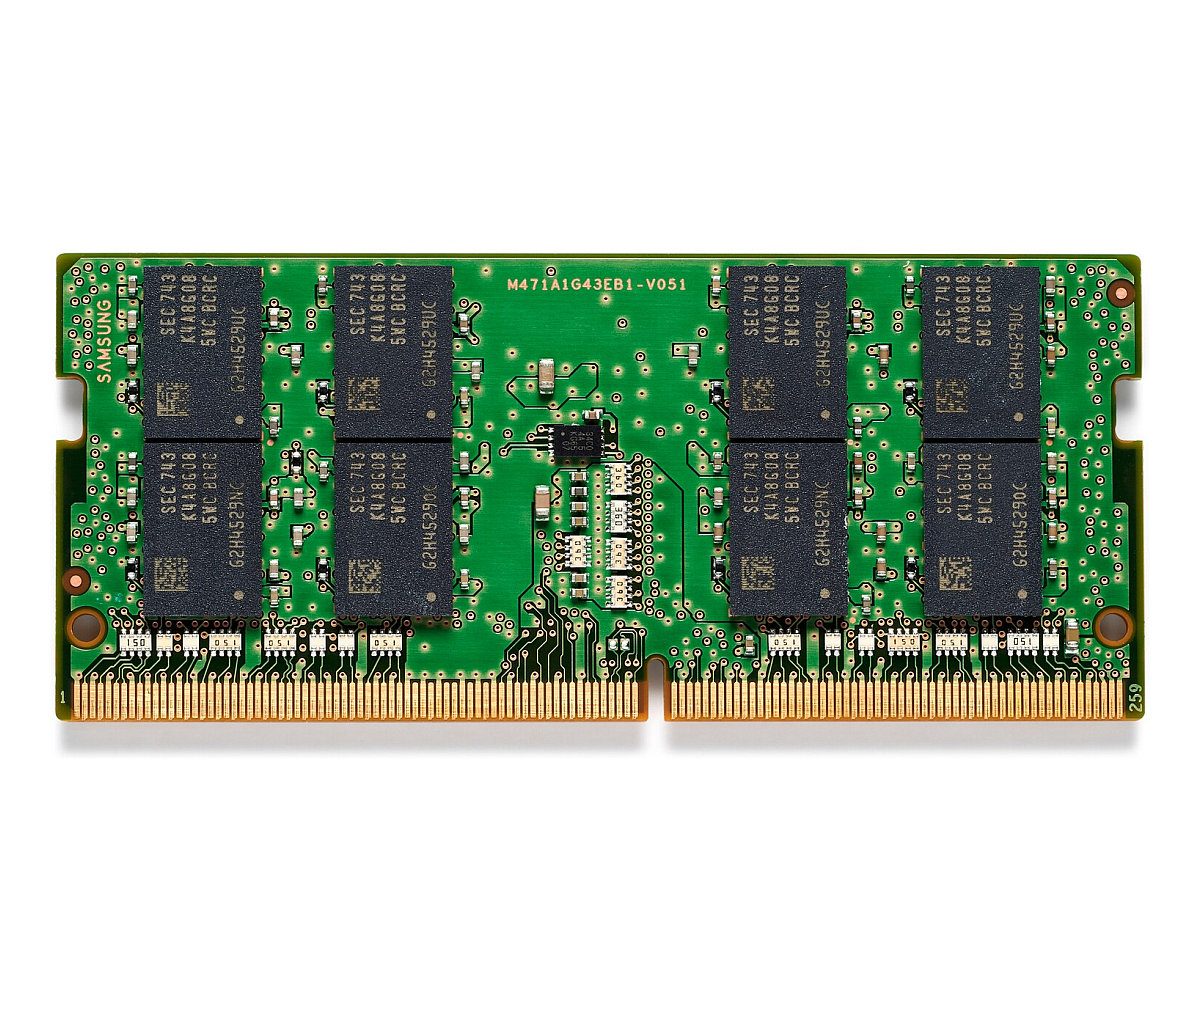 Pamäť HP 8 GB DDR4-2400 SODIMM ECC (Y7B56AA)